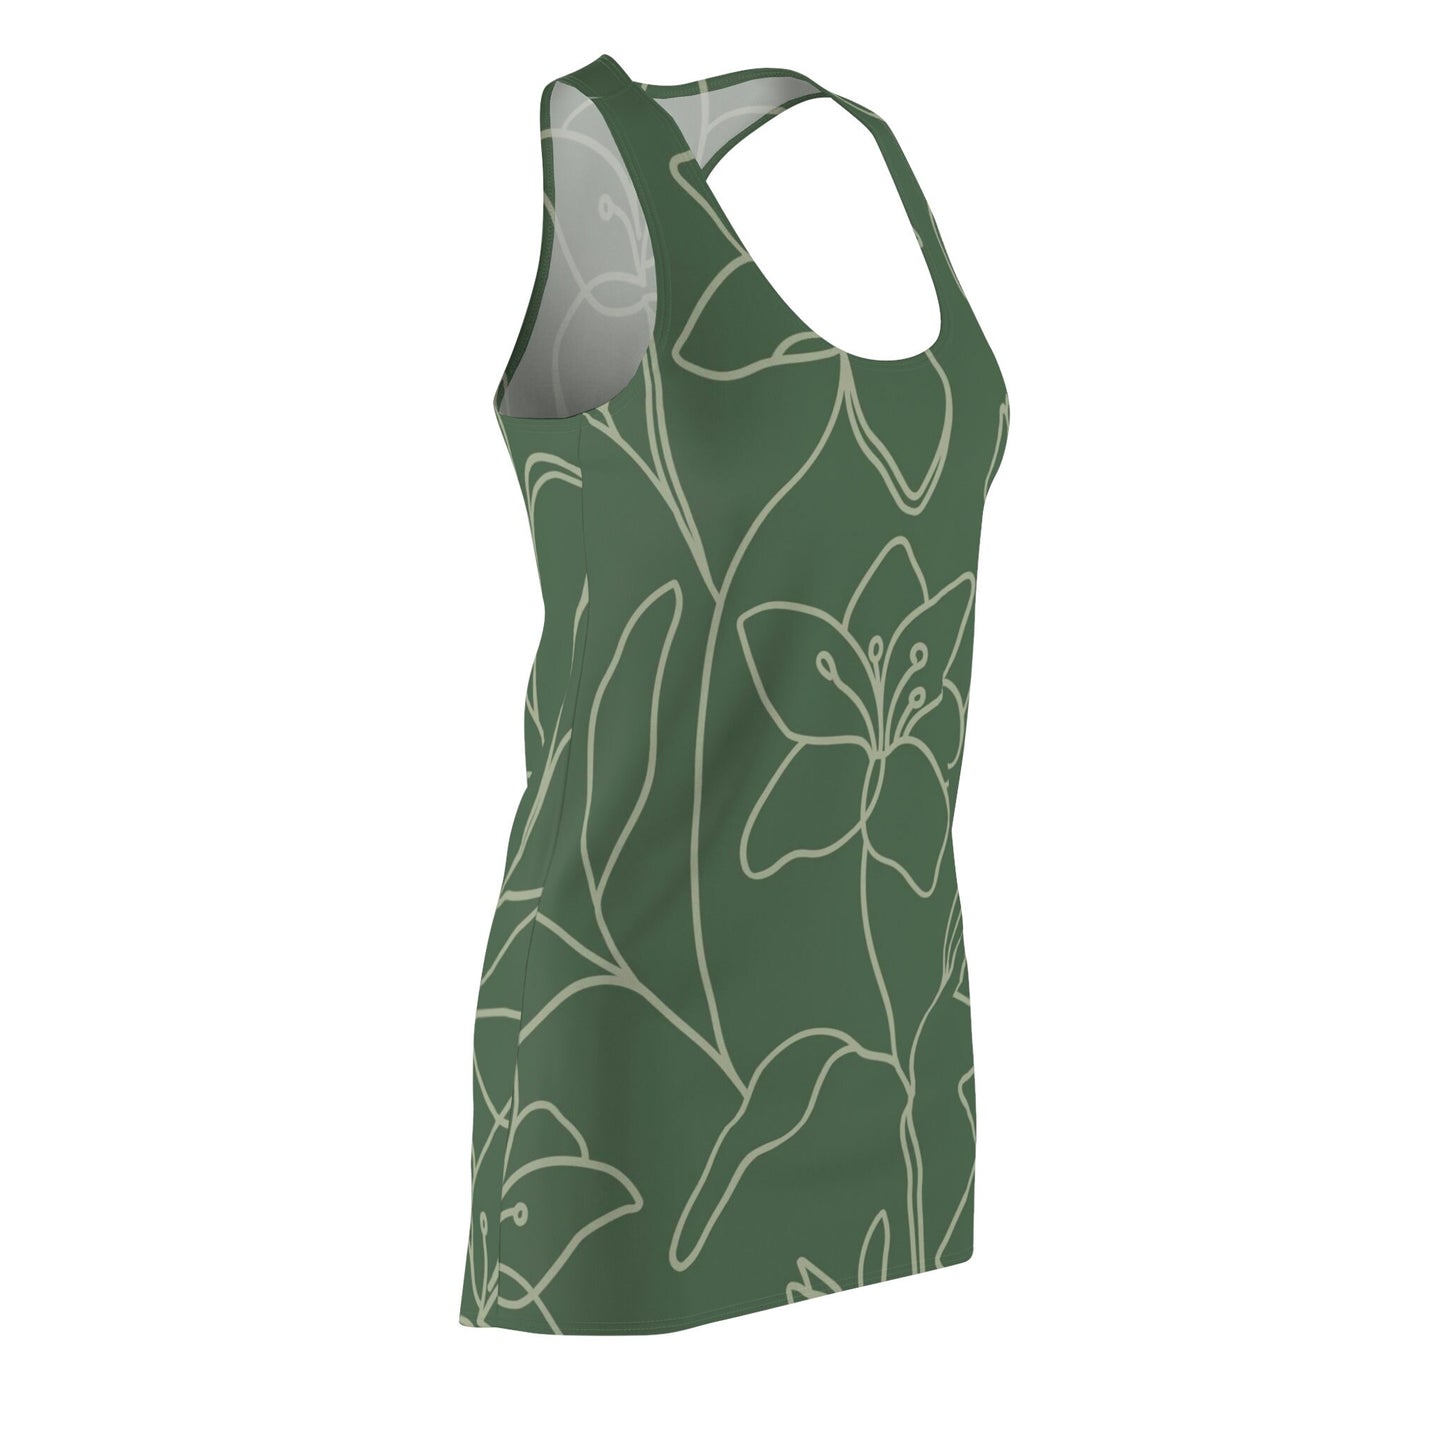 Adorable Green Floral Women's Cut & Sew Racerback Dress*